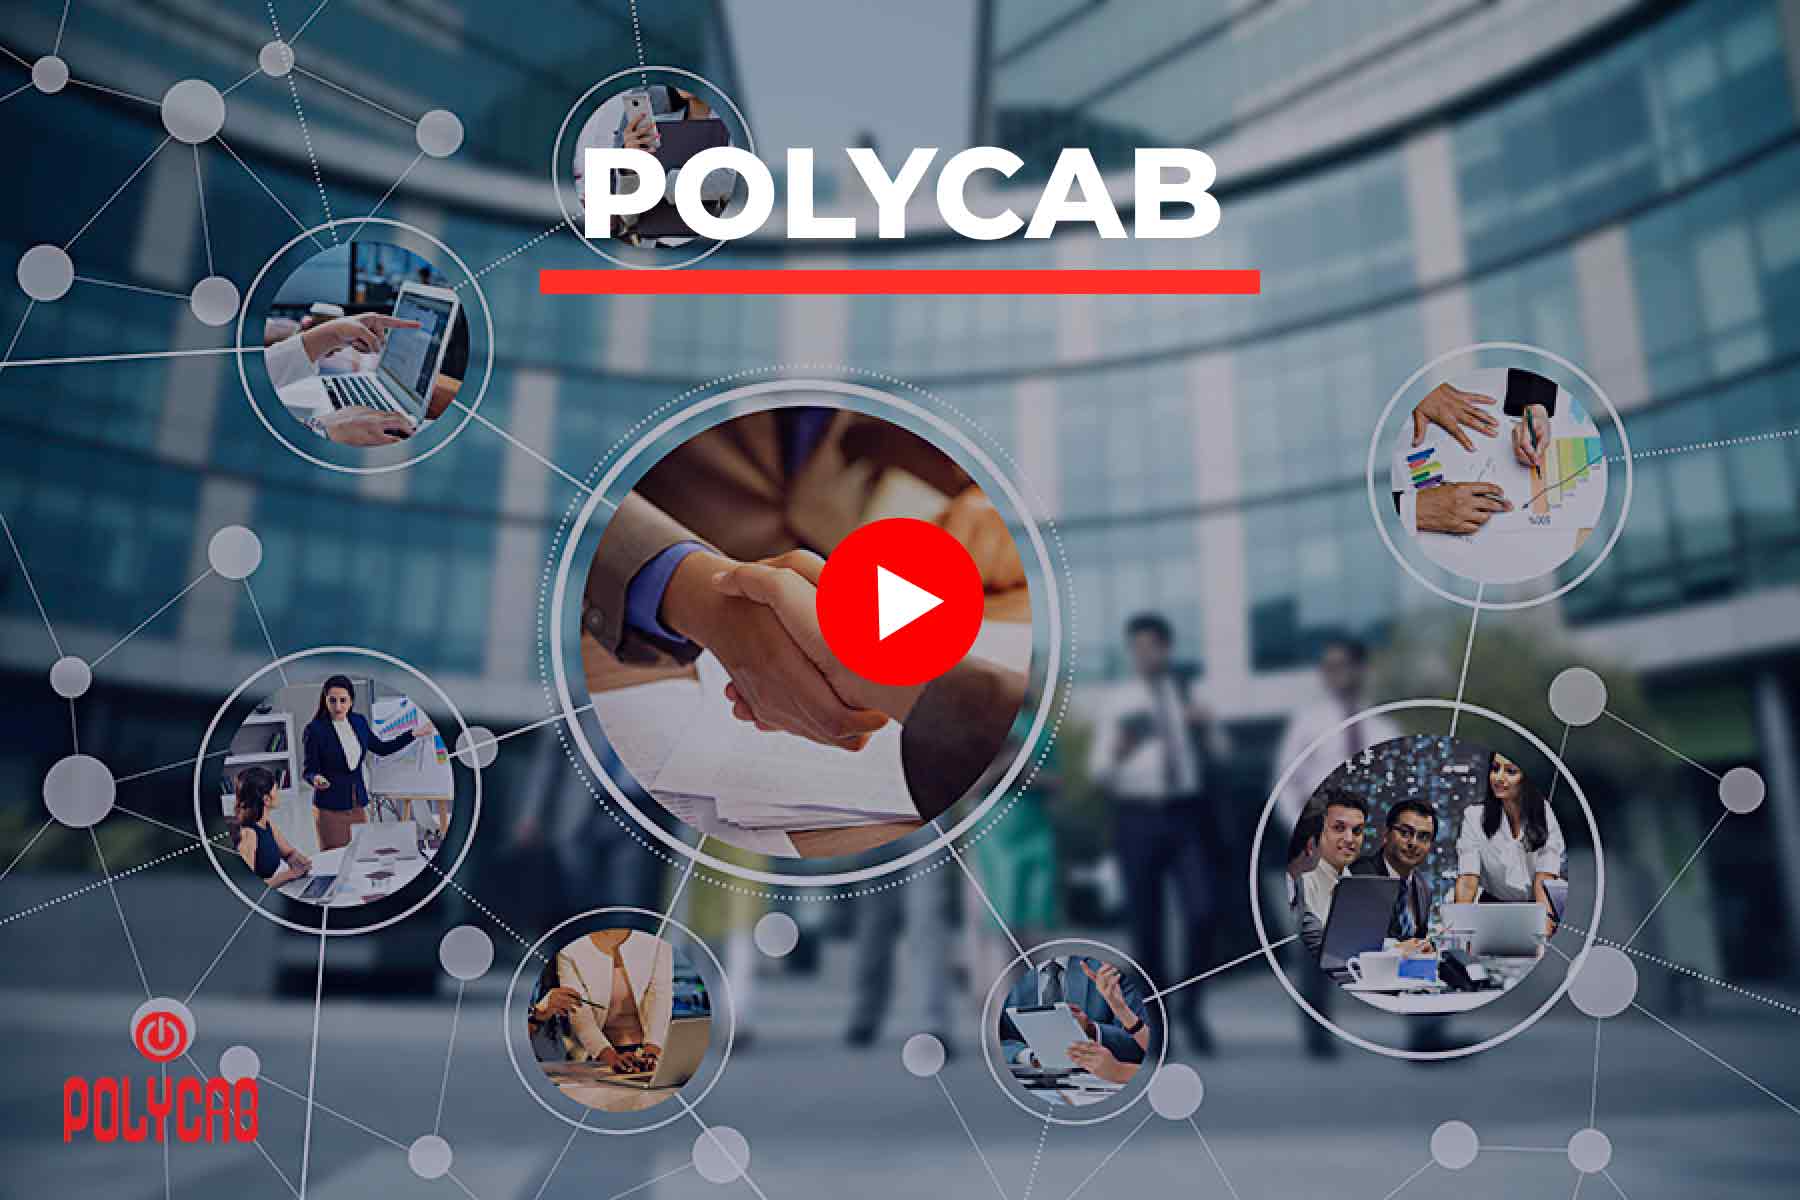 polycab image teghgroup website